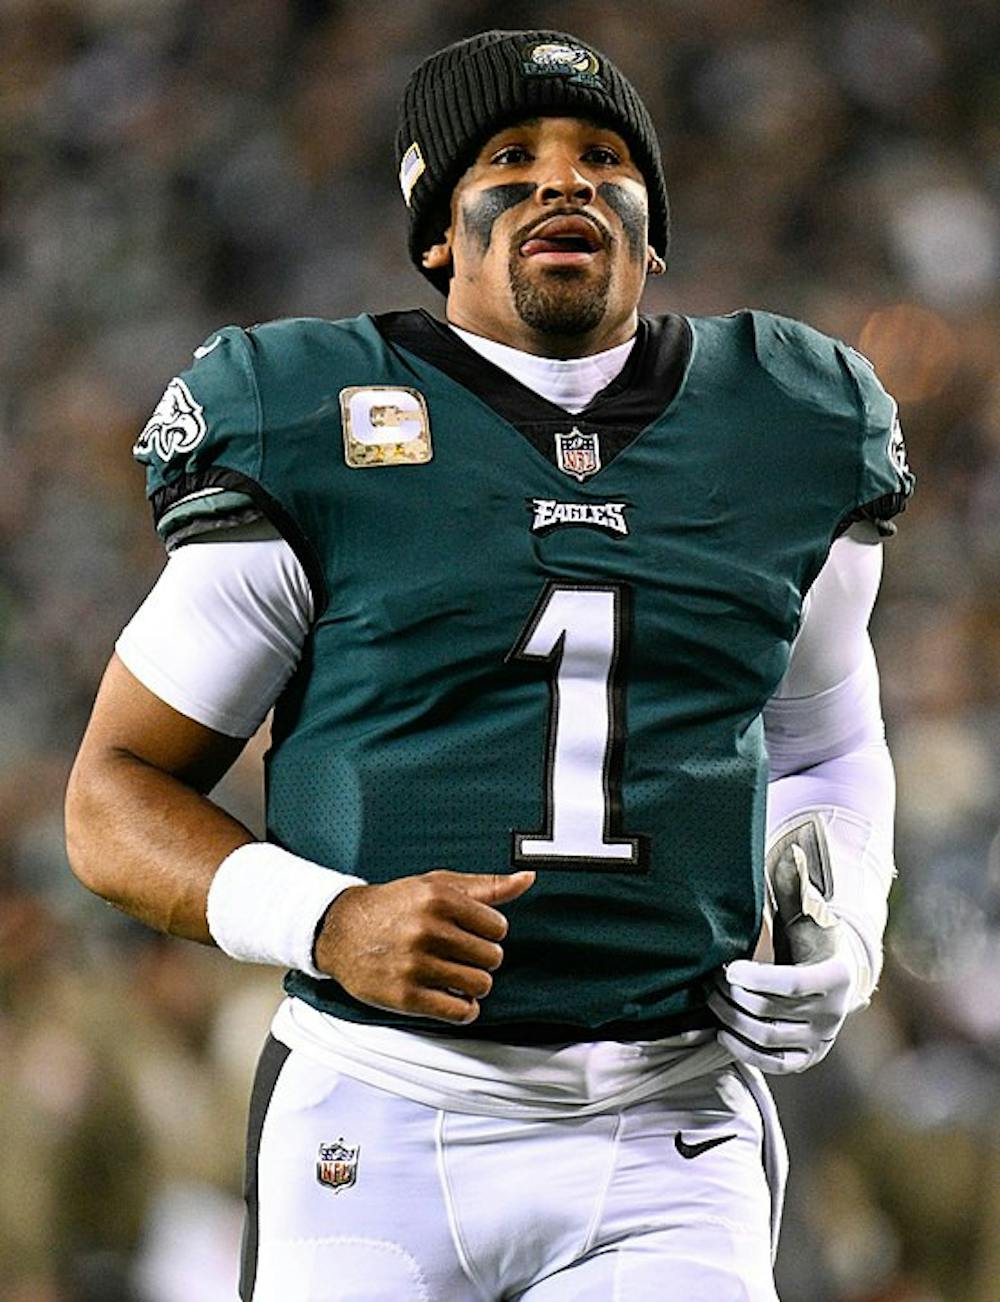 Jalen Hurts, Philadelphia Eagles quarterback (Photo courtesy of All-Pro Reels / Wikipedia Commons).